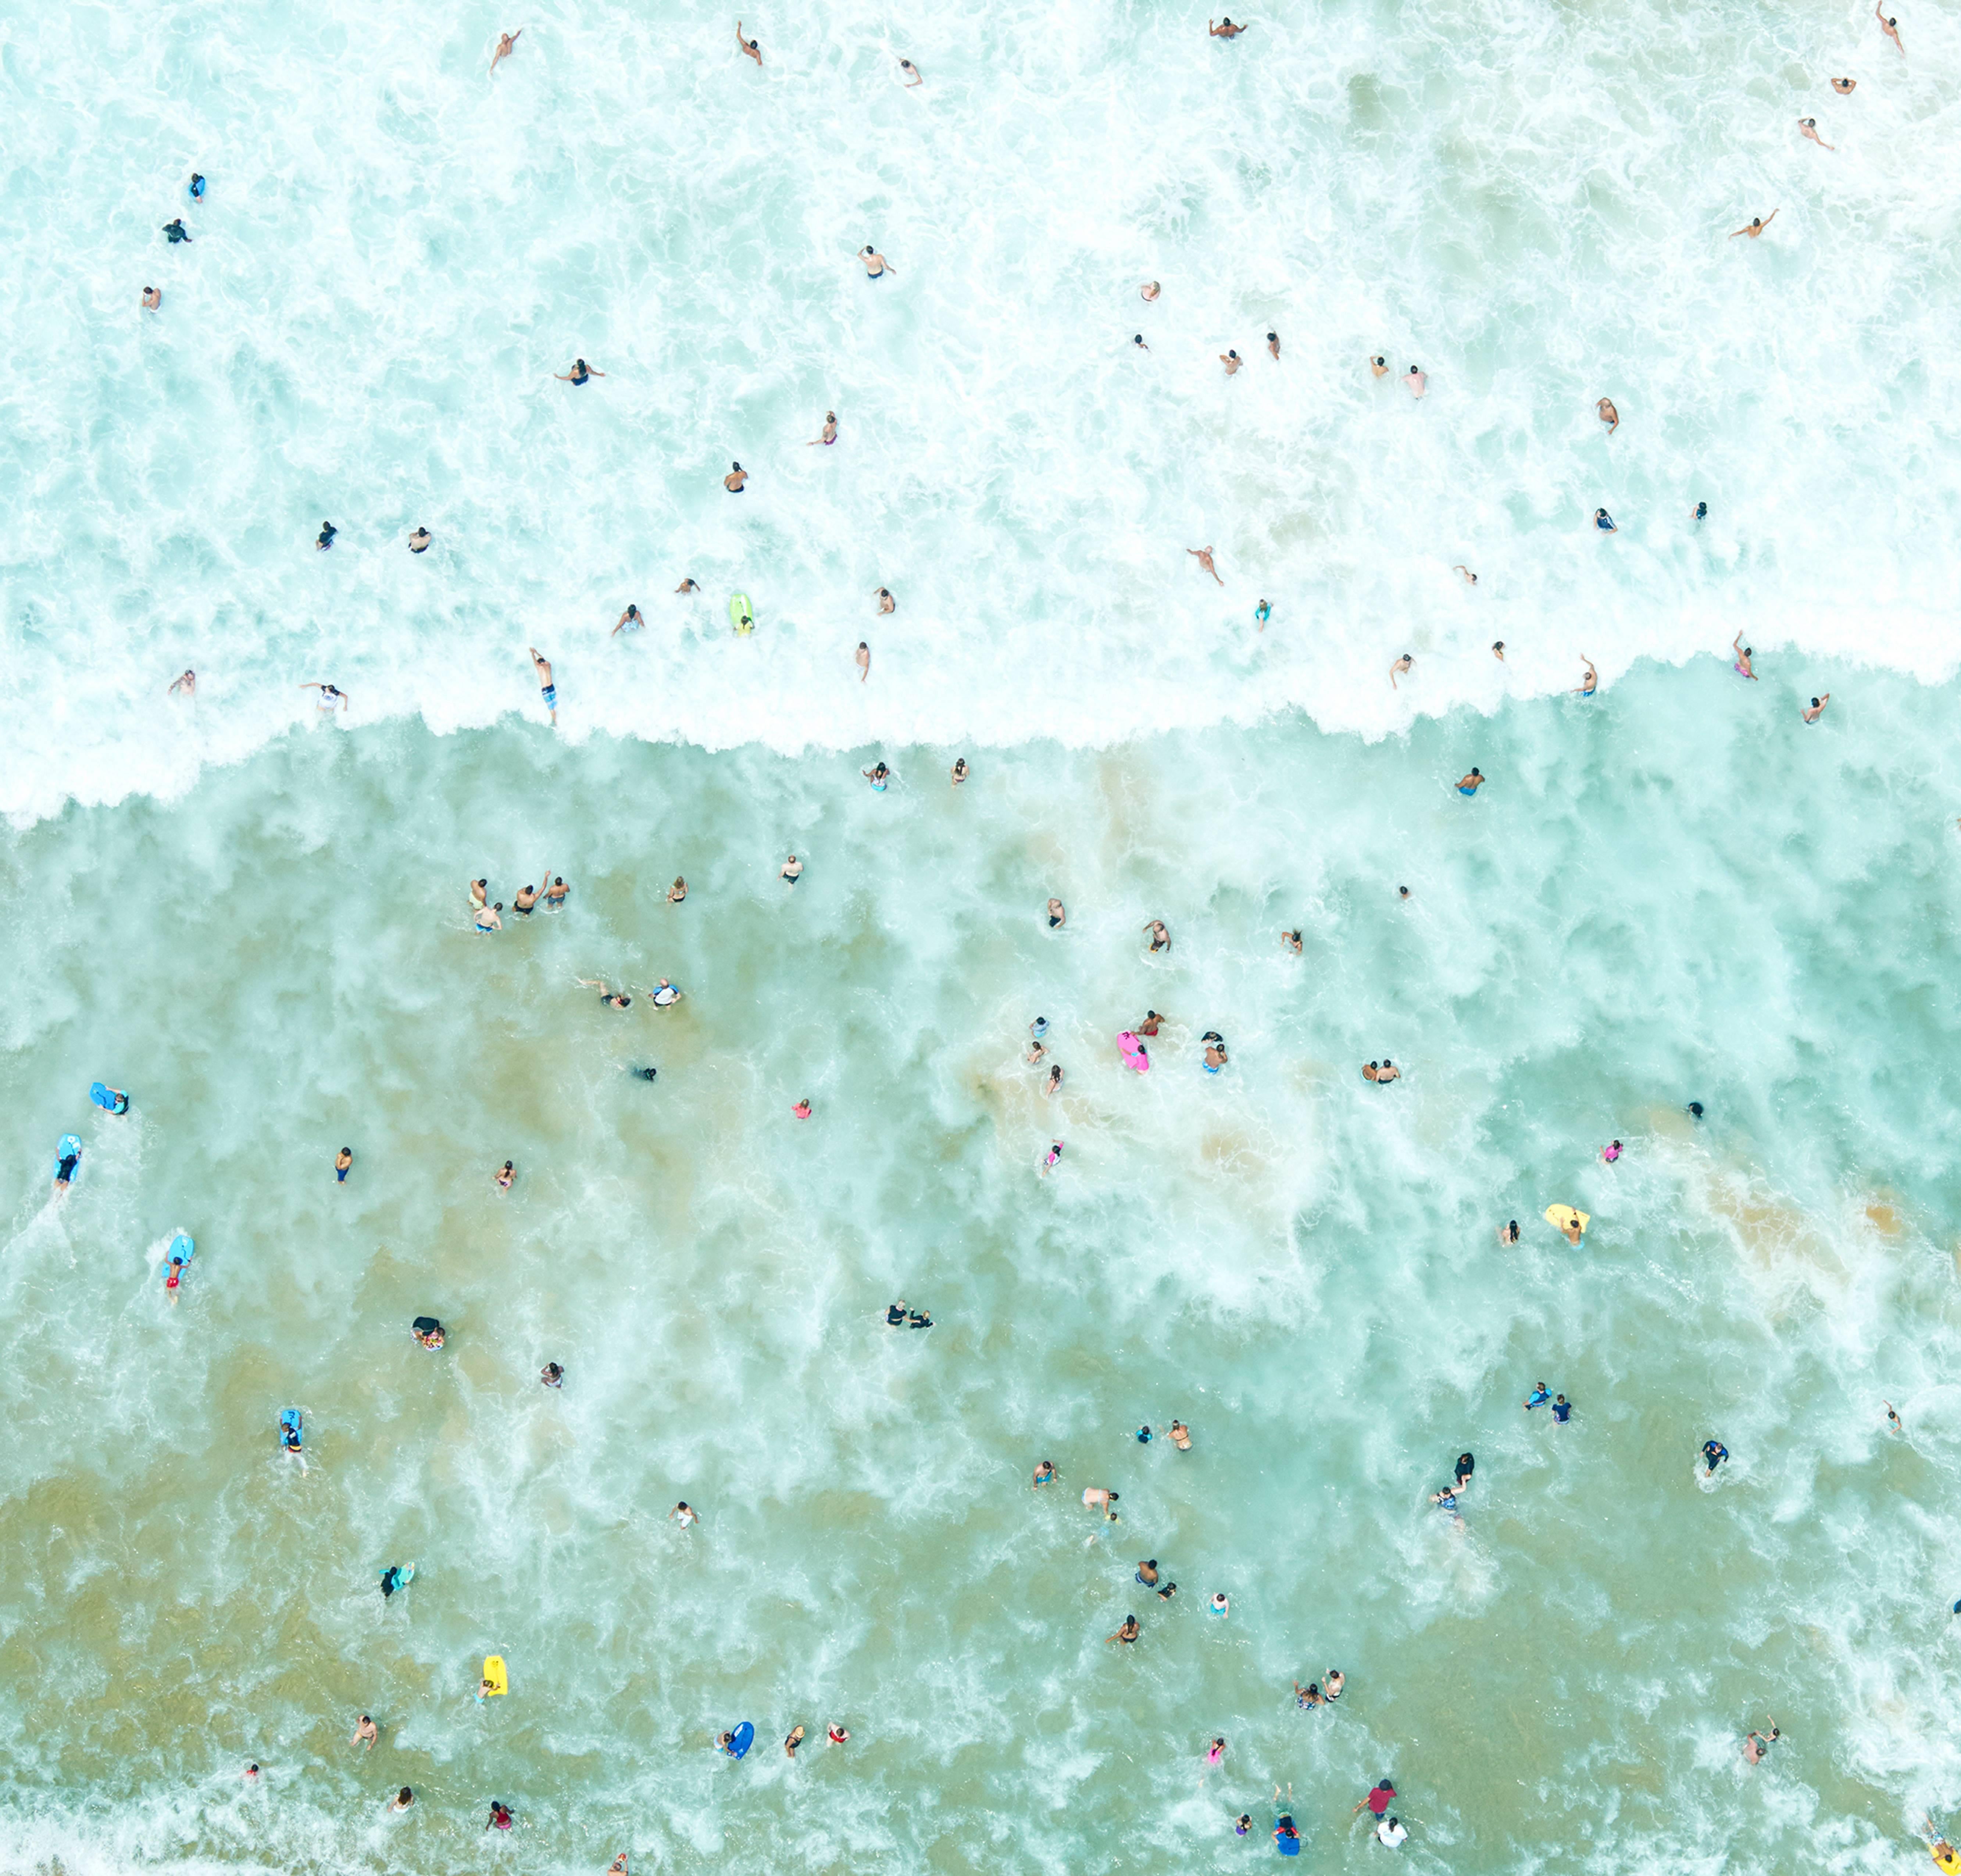 Joshua Jensen-Nagle Color Photograph - Bathing In Bliss